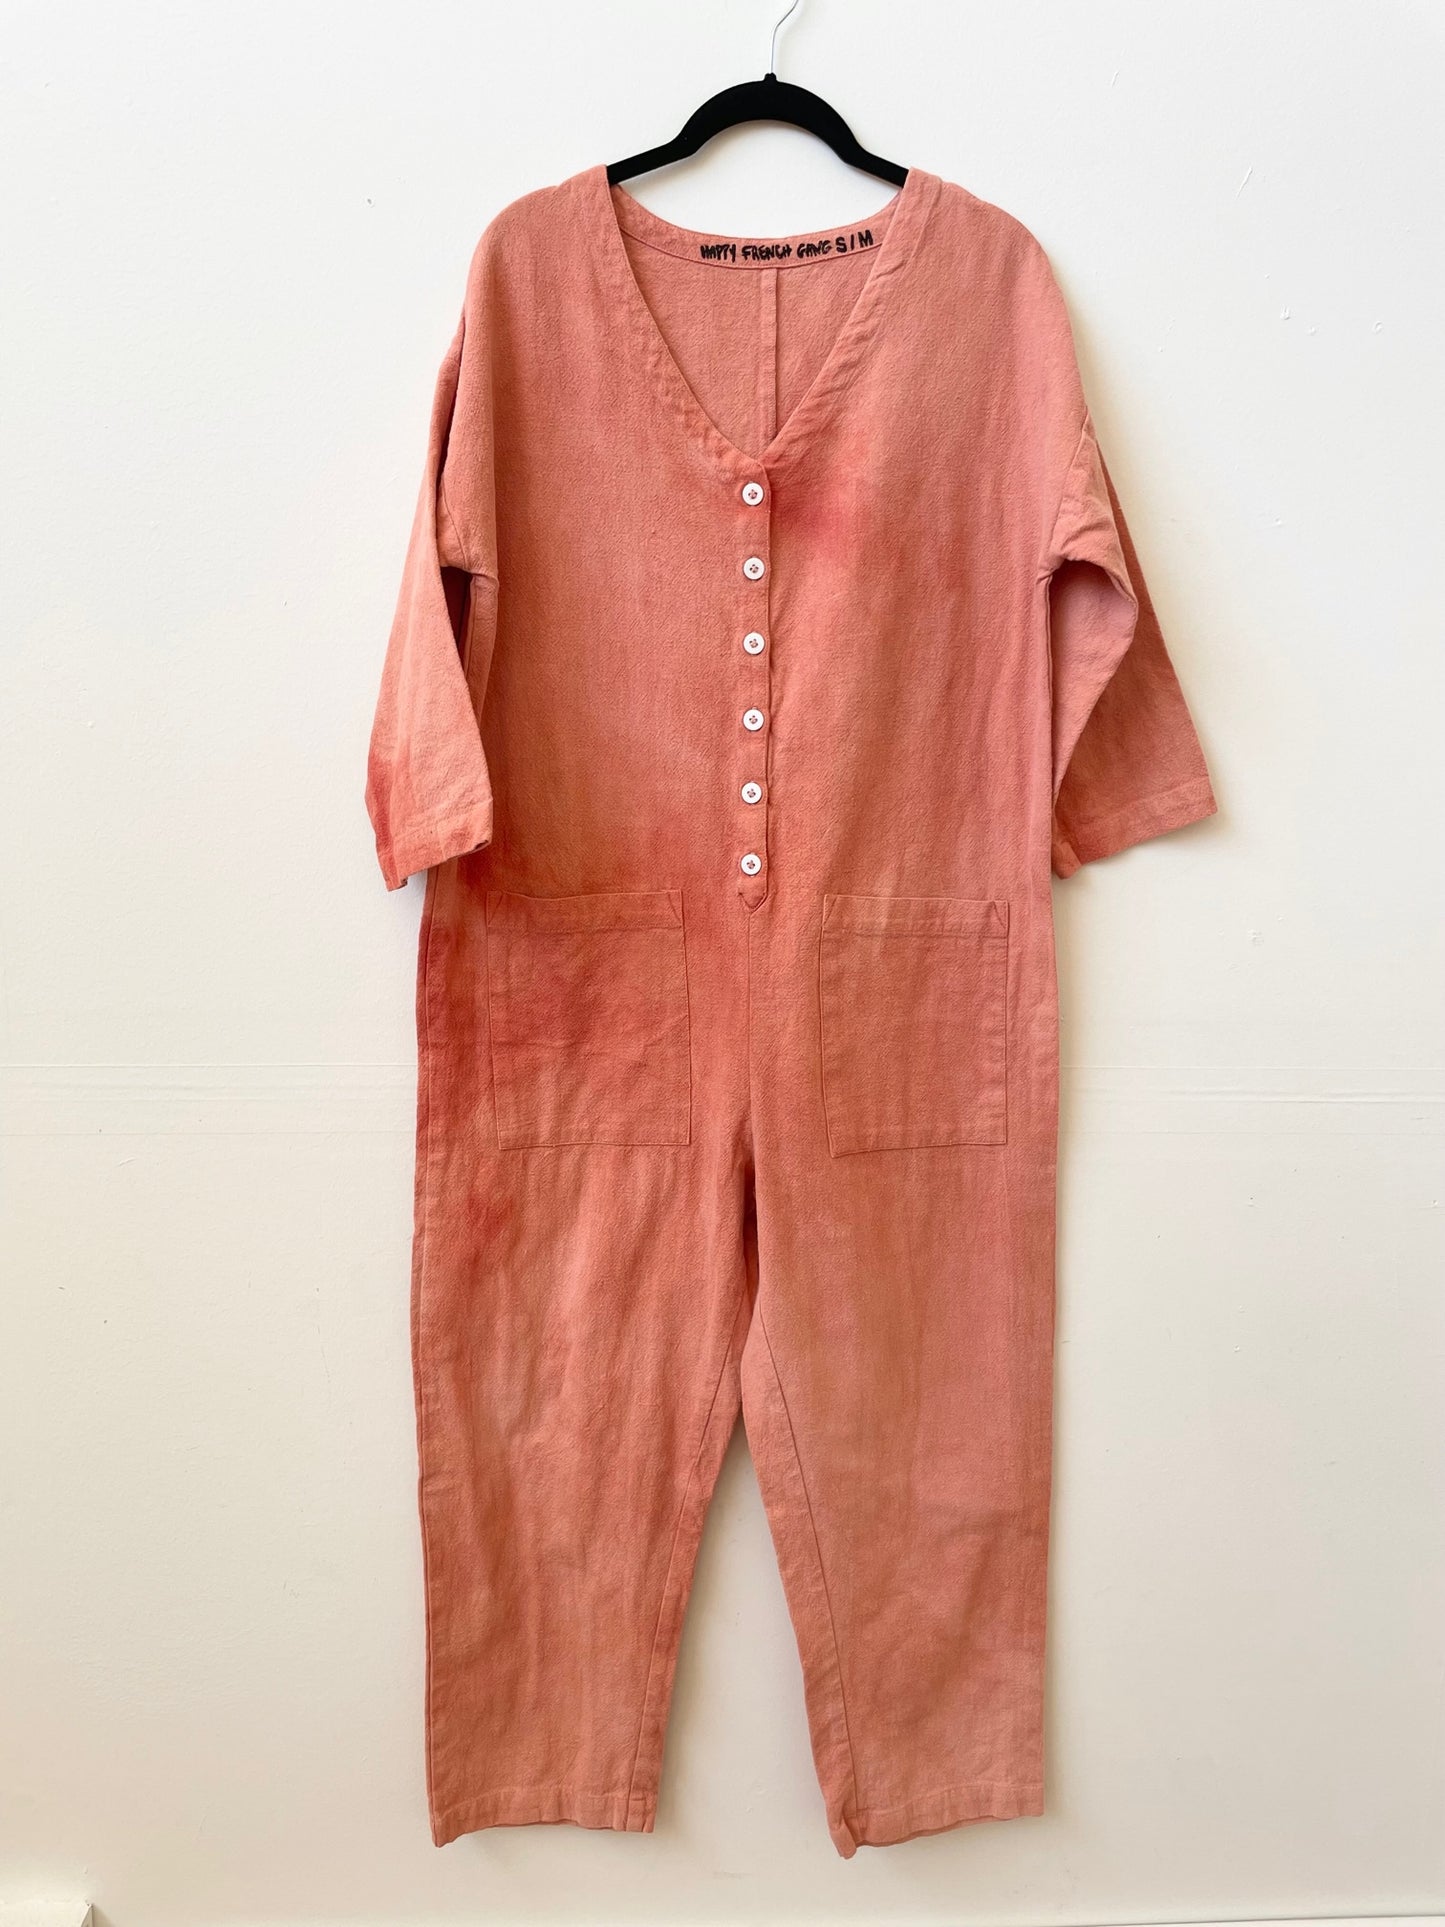 #58 Tie-dye Peach Jumpsuit S/M